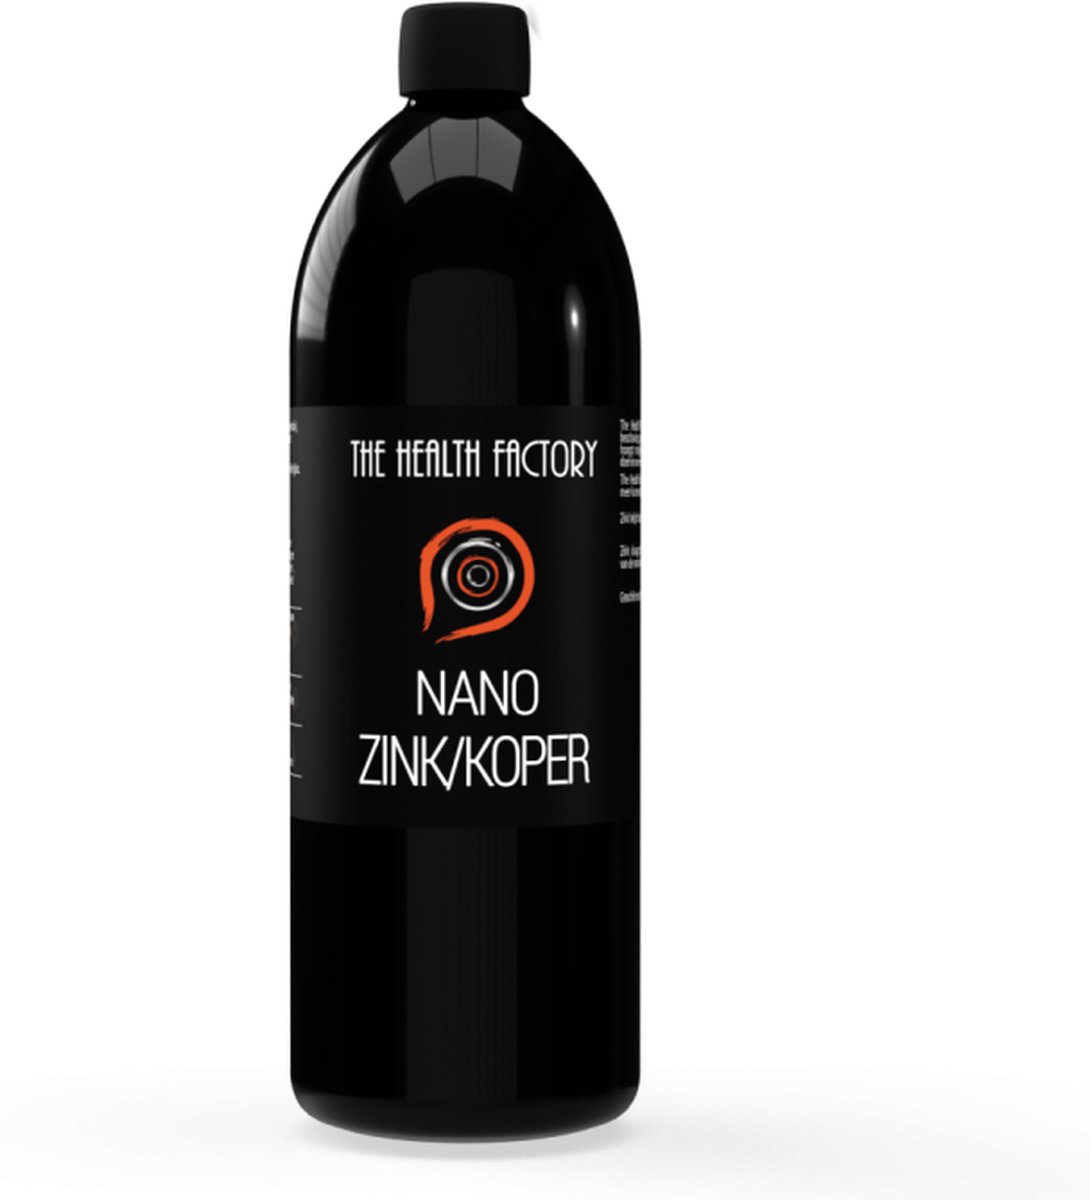 Nano Zink/Koper 1 liter - Health Factory